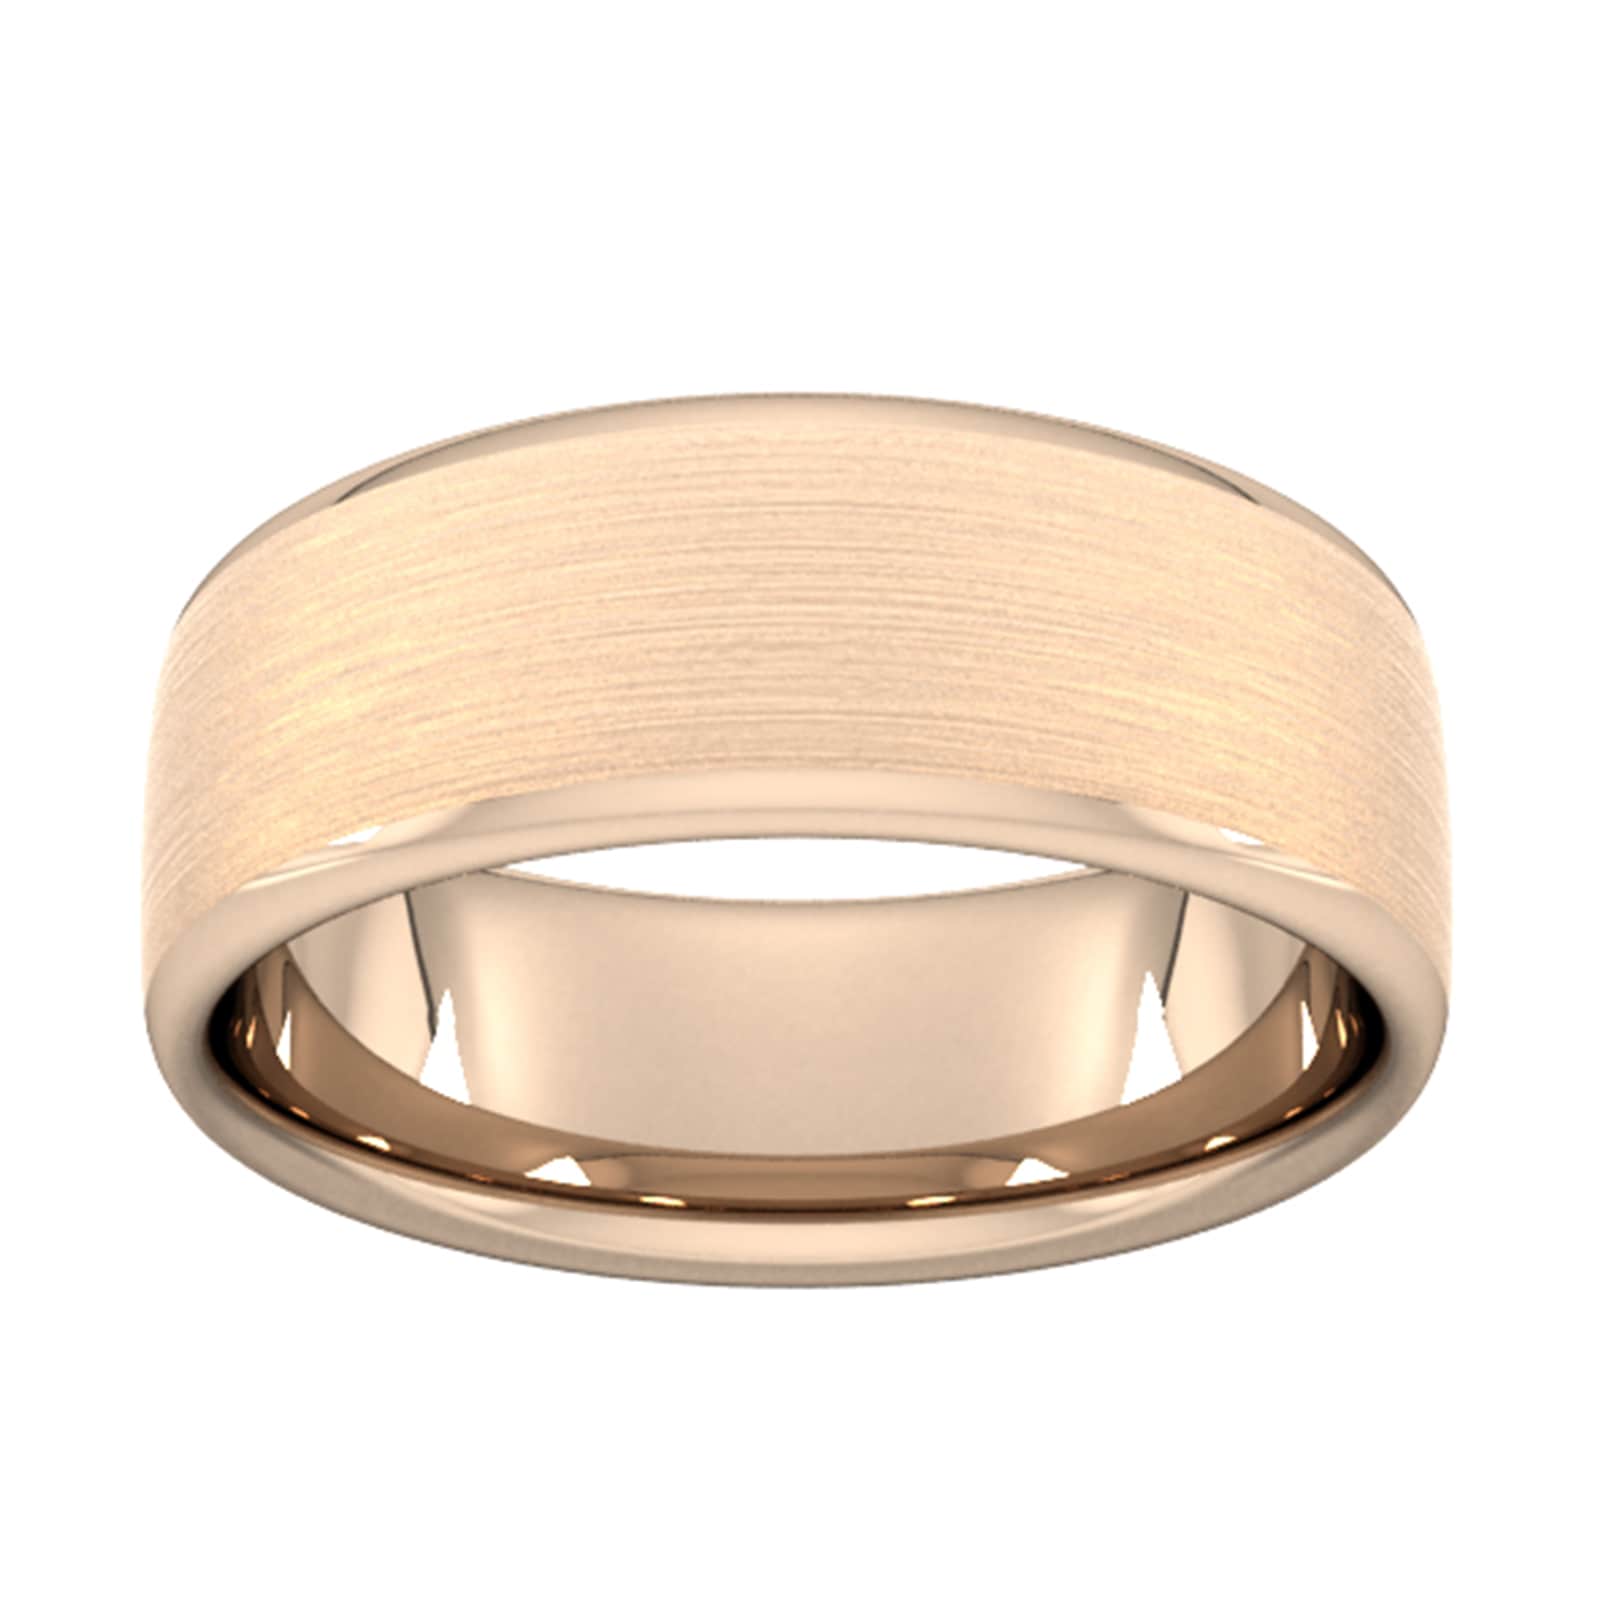 8mm D Shape Standard Matt Finished Wedding Ring In 18 Carat Rose Gold - Ring Size L